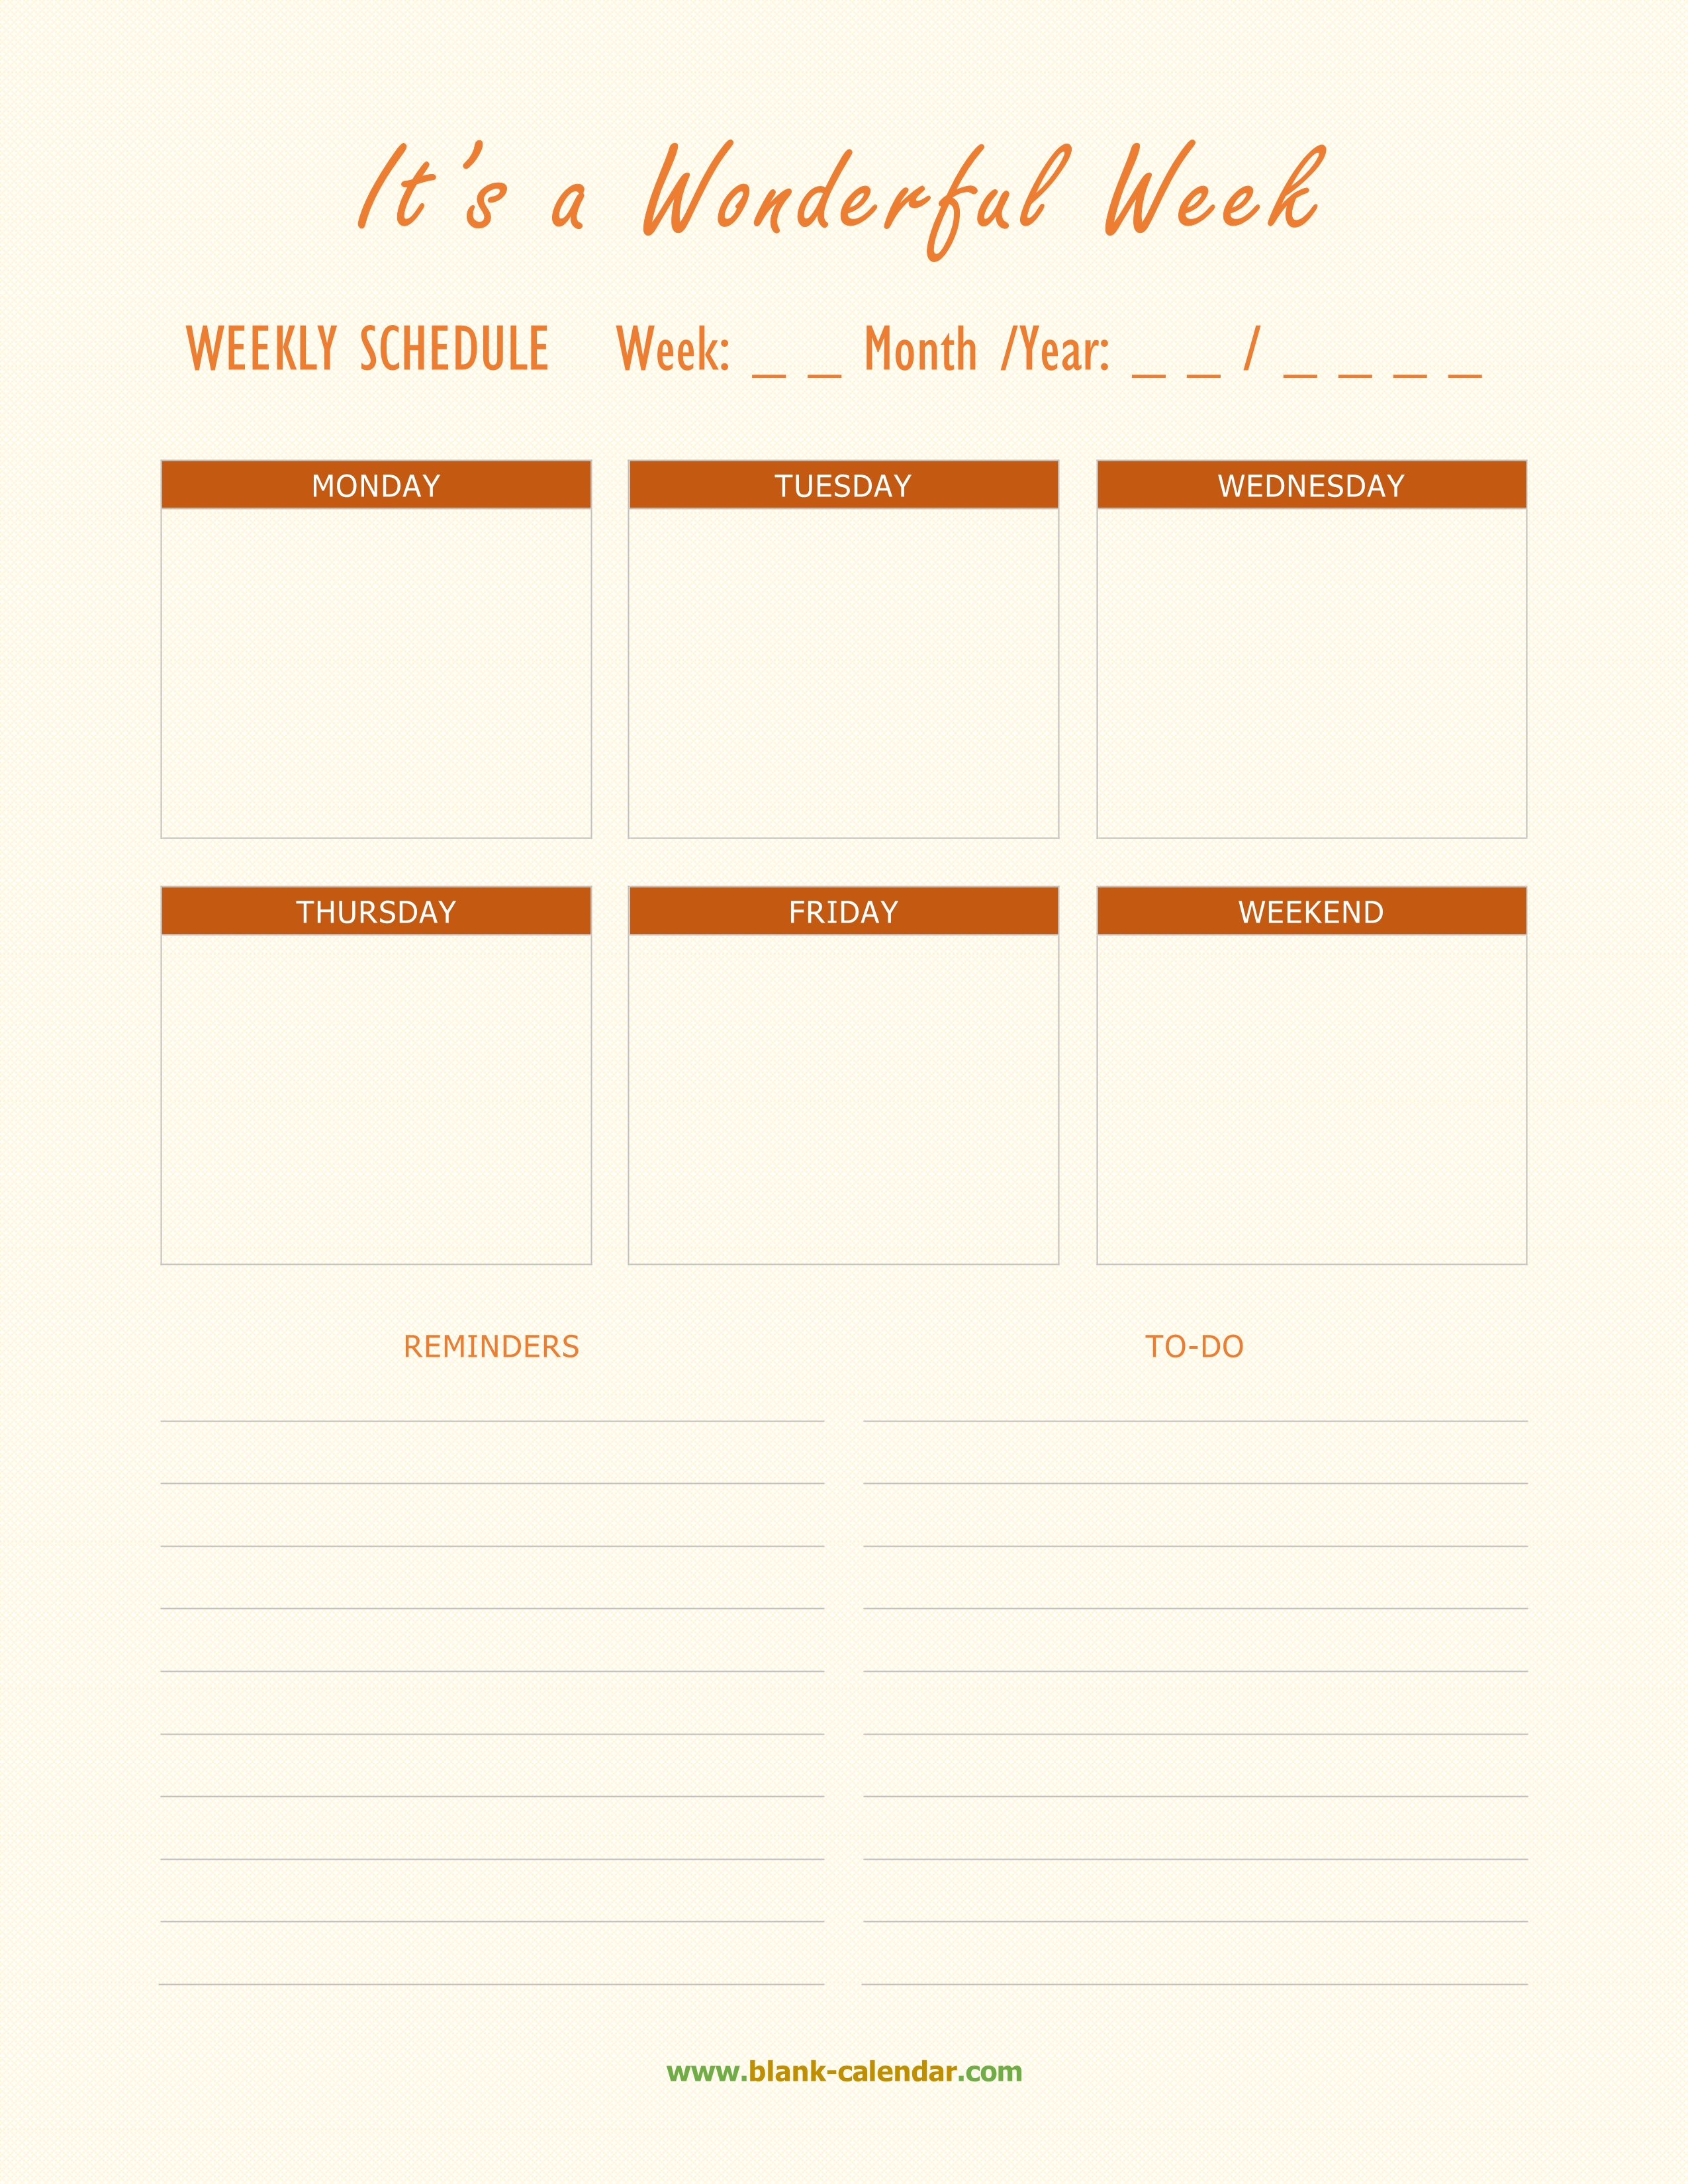 Weekly Schedule Planner Templates (WORD, EXCEL, PDF)